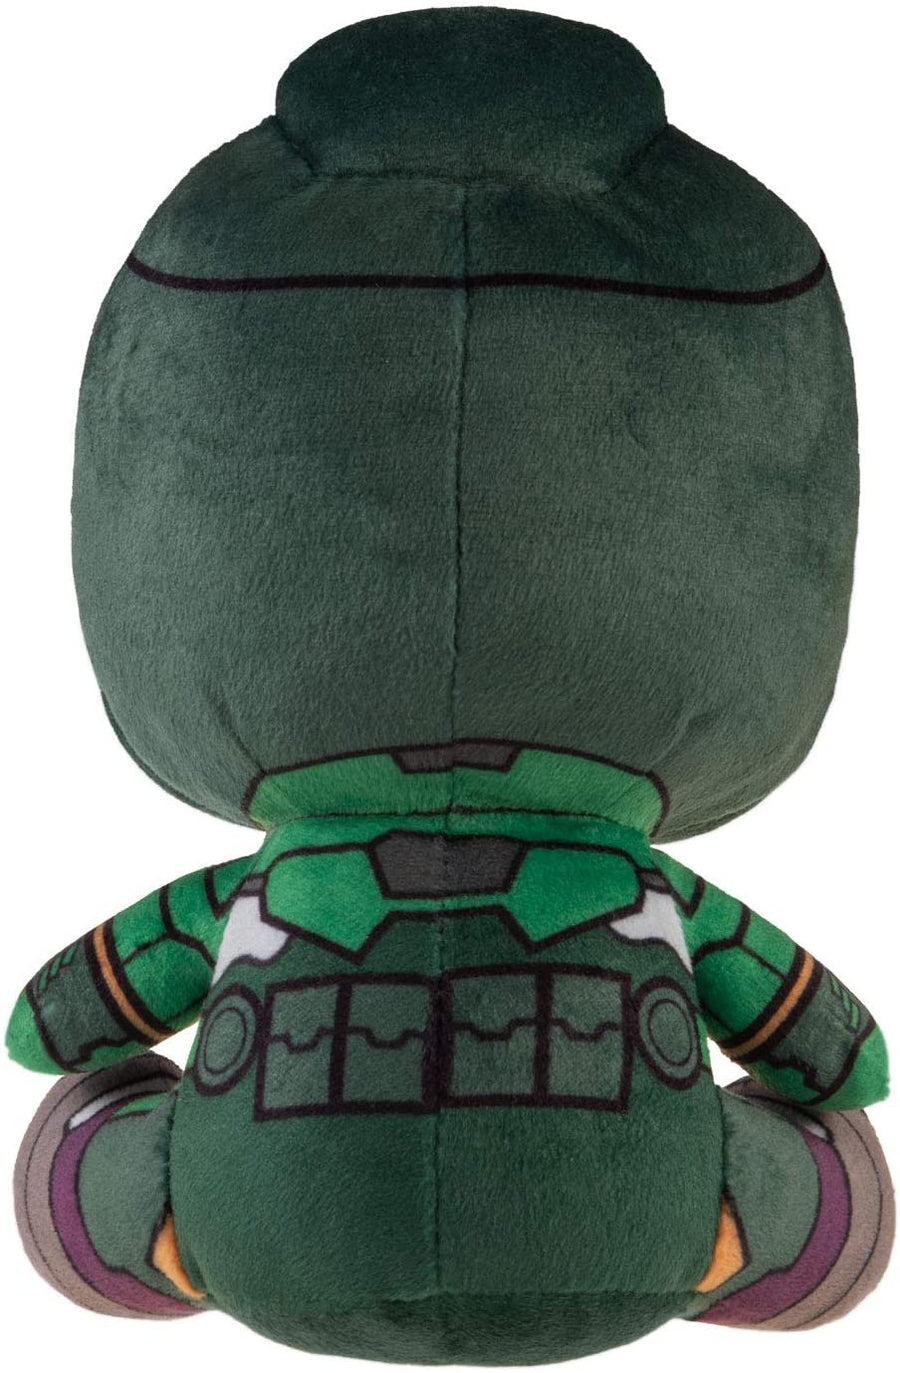 Doom Slayer Stubbins Cuddly Effigy Plush Green Armor Action Figure 8